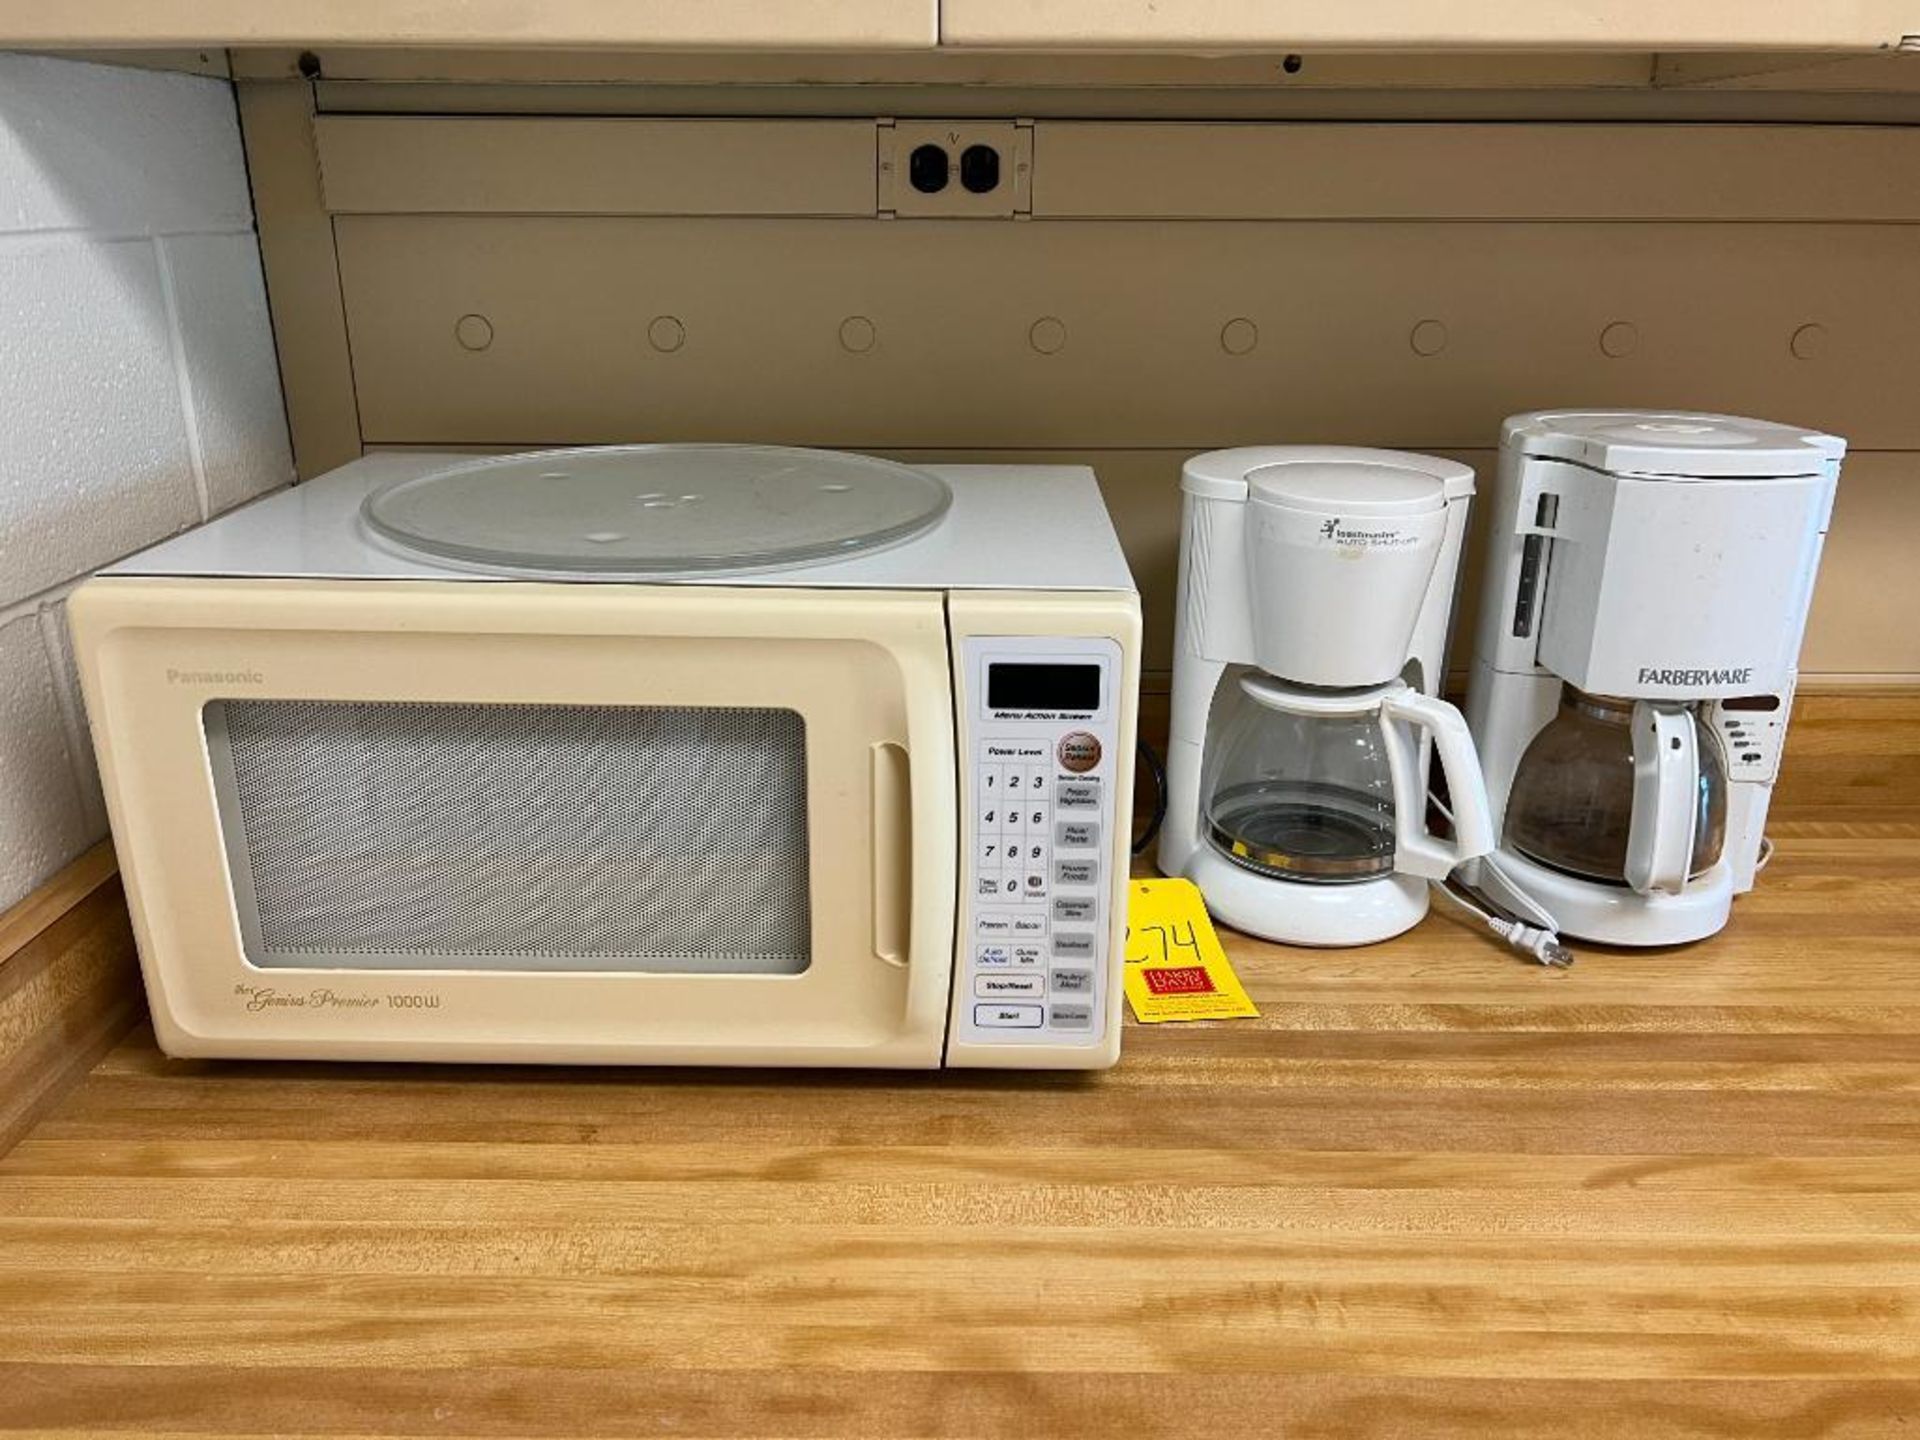 Panasonic Microwave and (2) Coffee Makers - Rigging Fee: $50